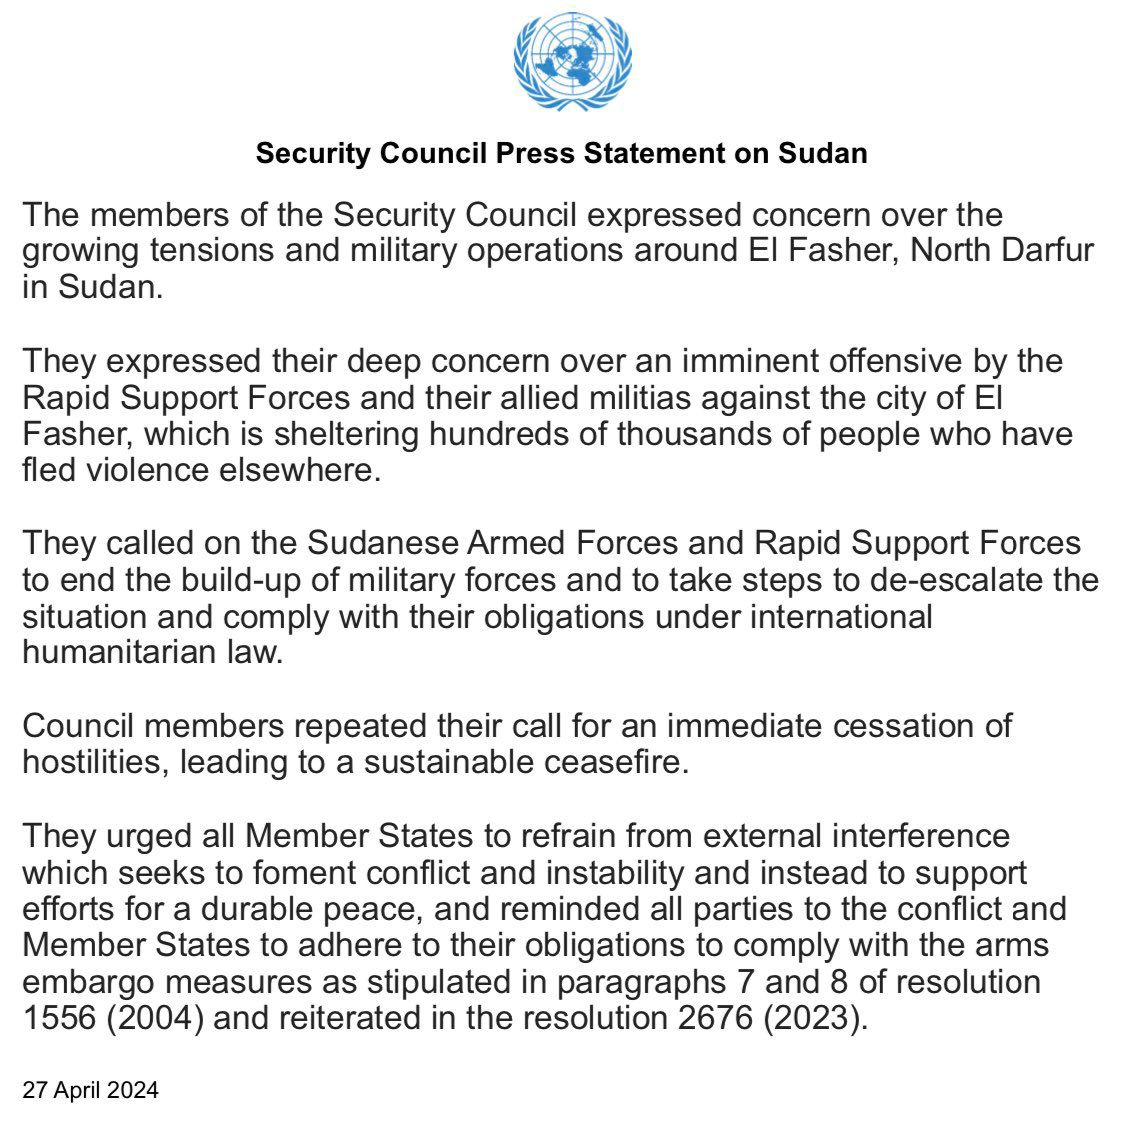 UN Security Council Press Statement on Sudan